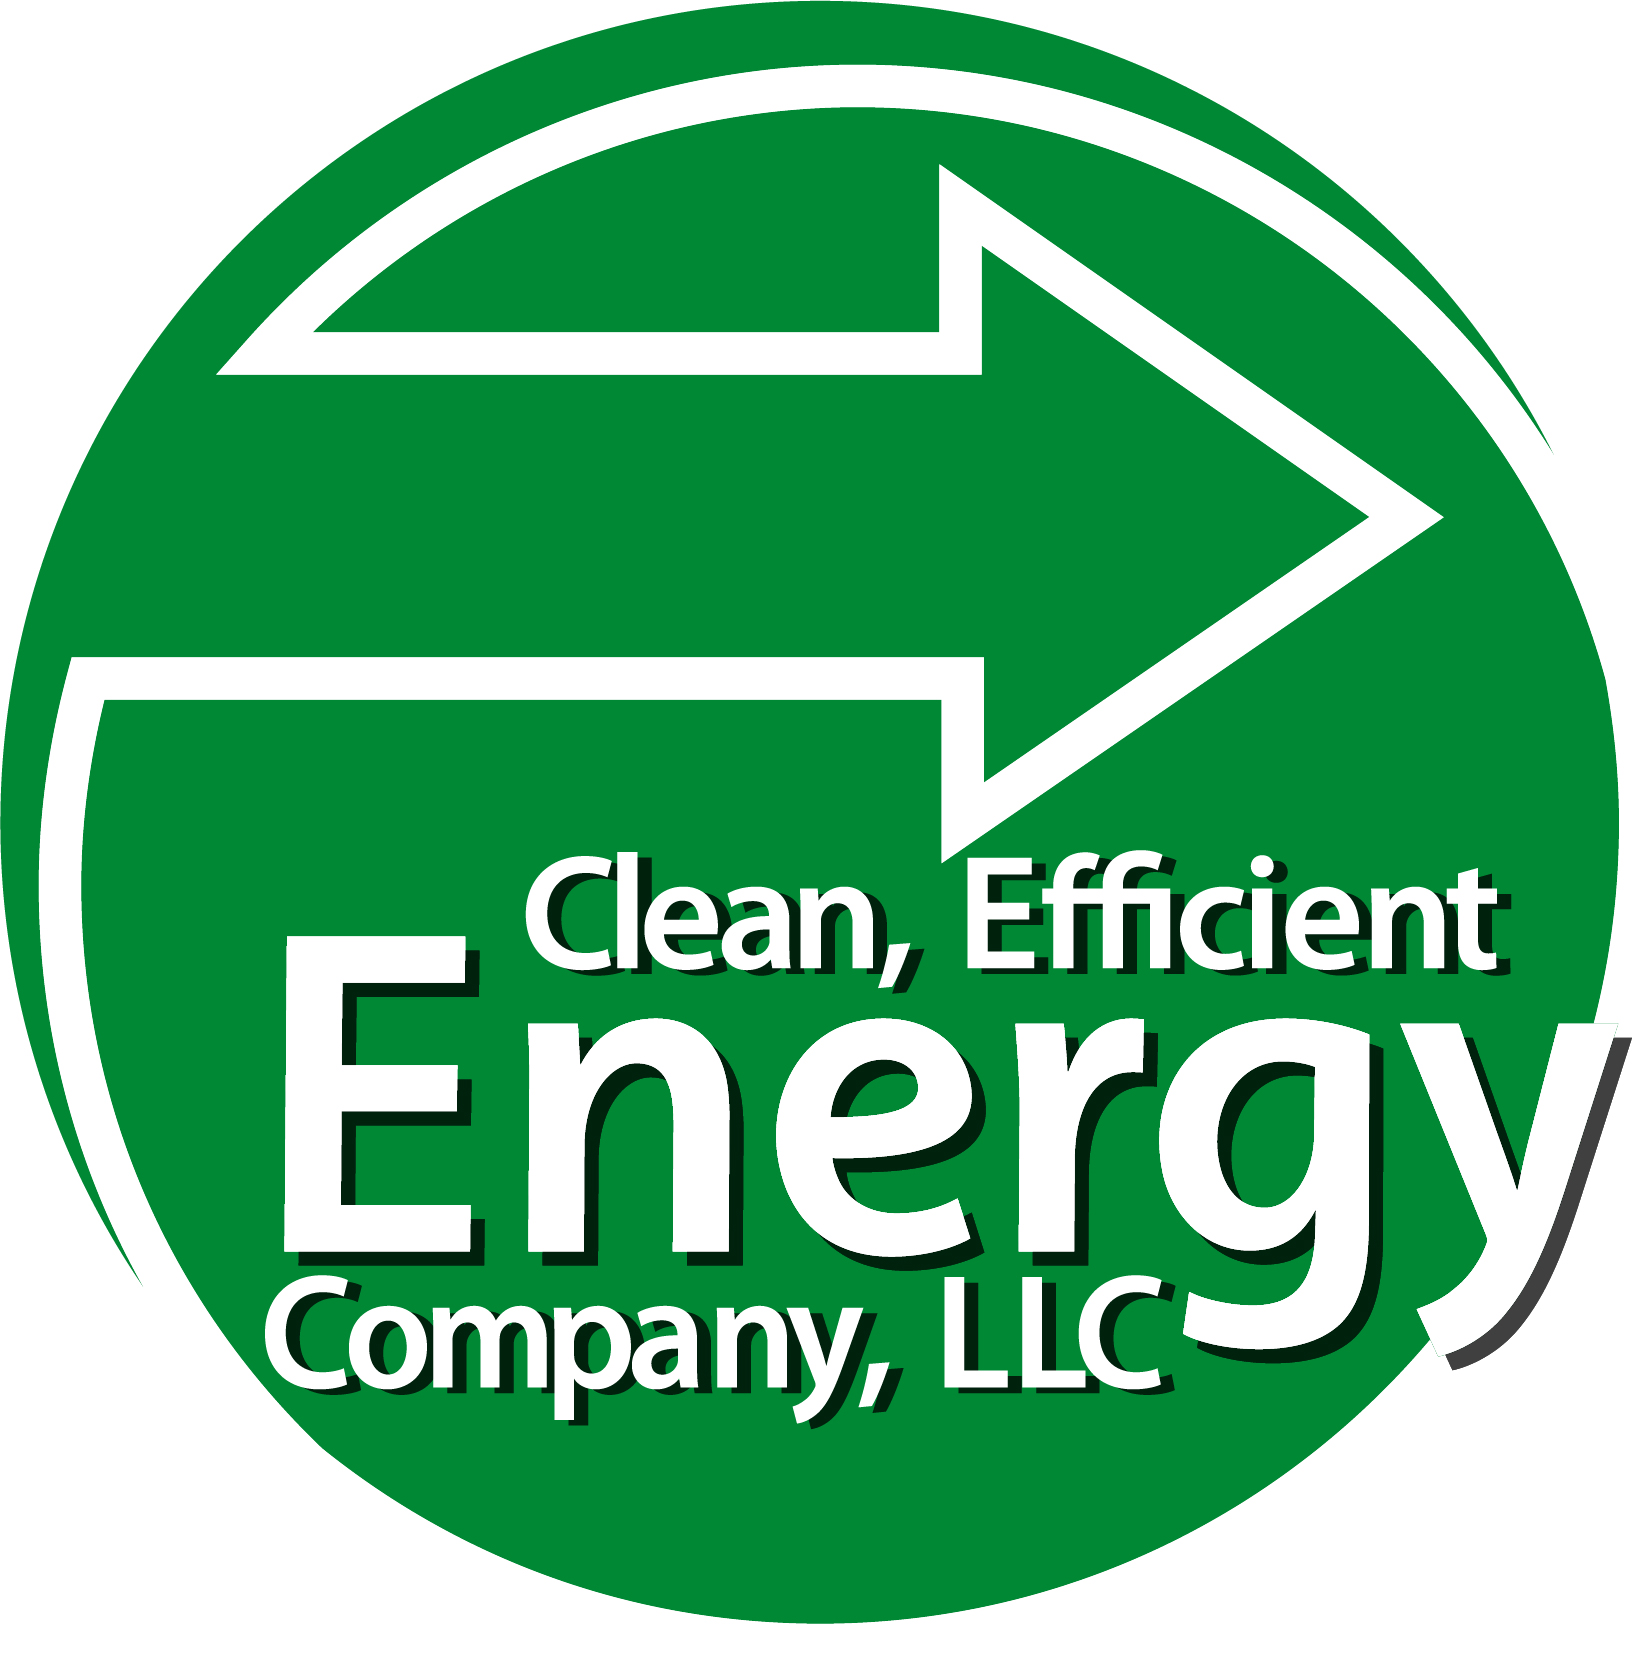 Clean Efficient Energy Company, LLC company logo